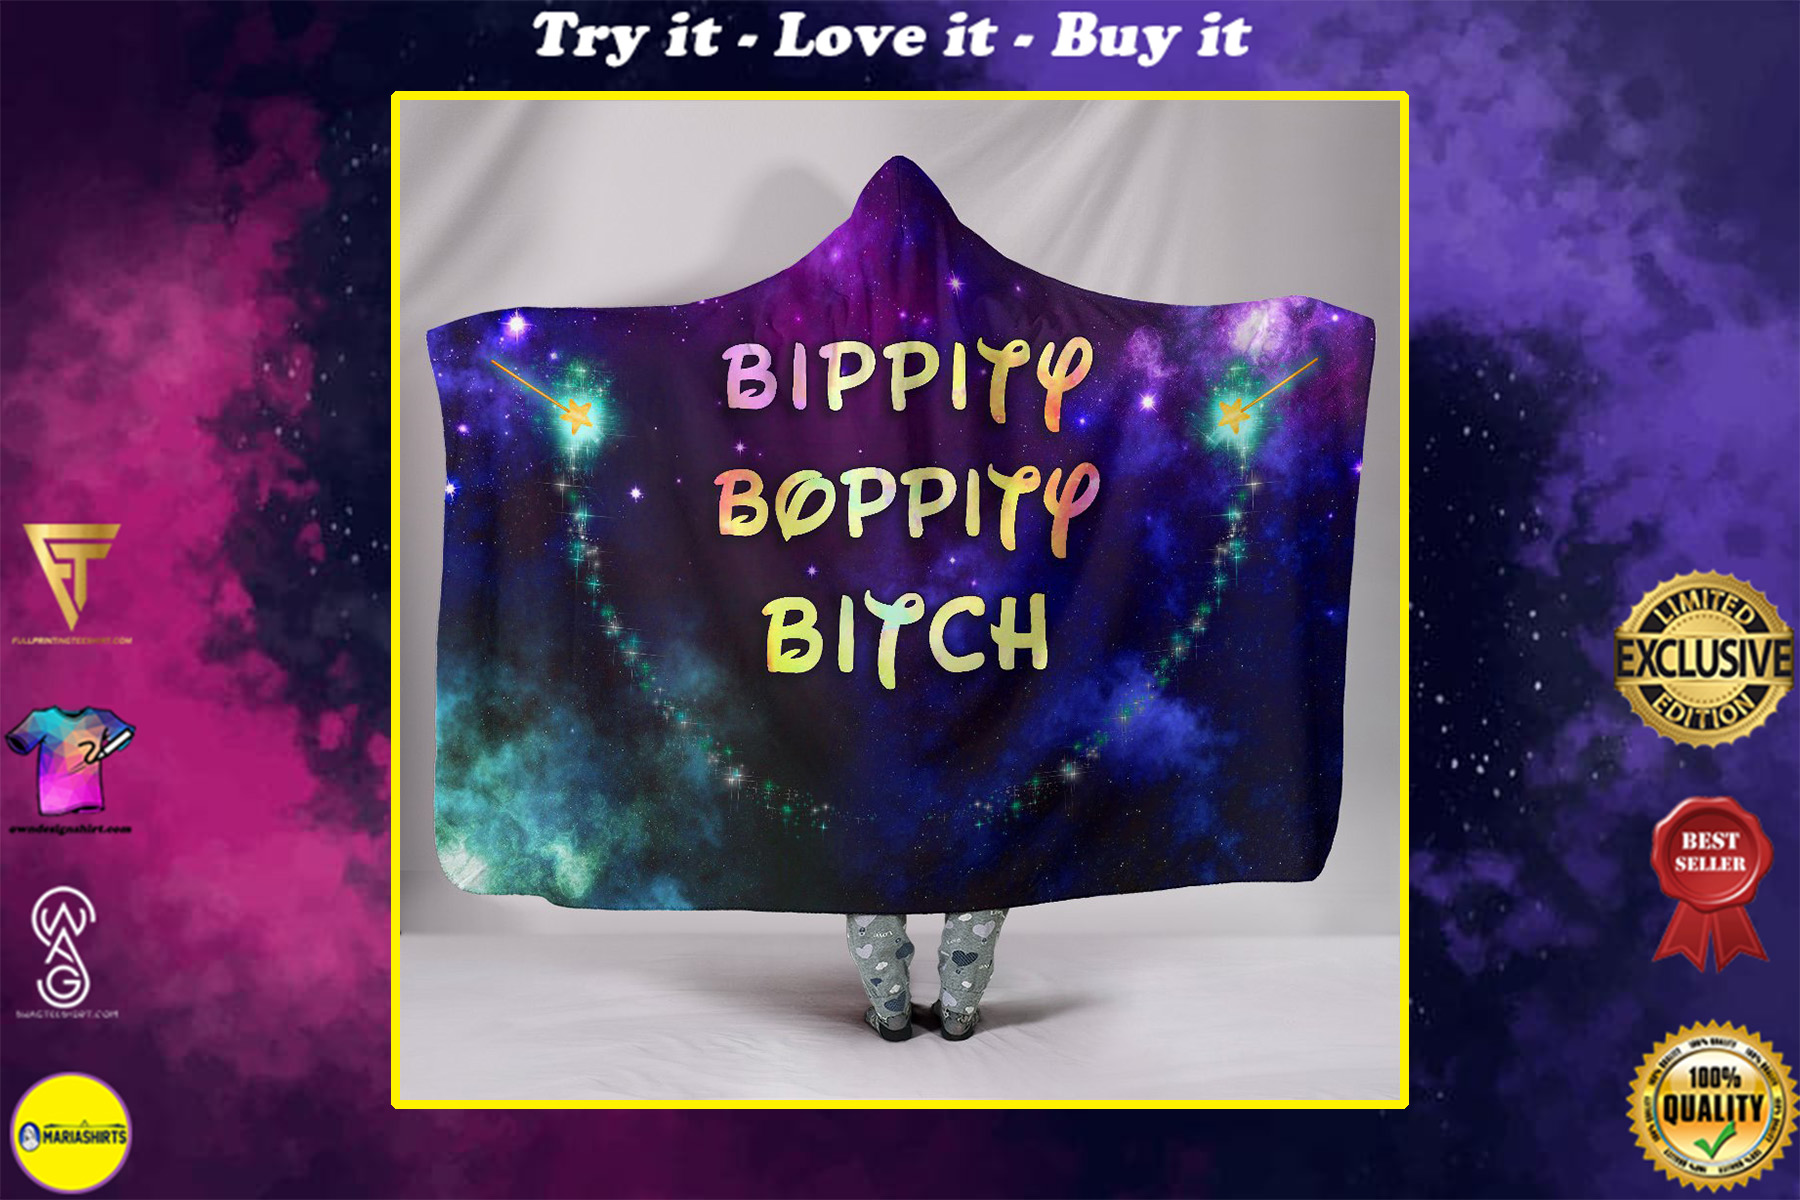 bippity boppity bitch full printing hooded blanket